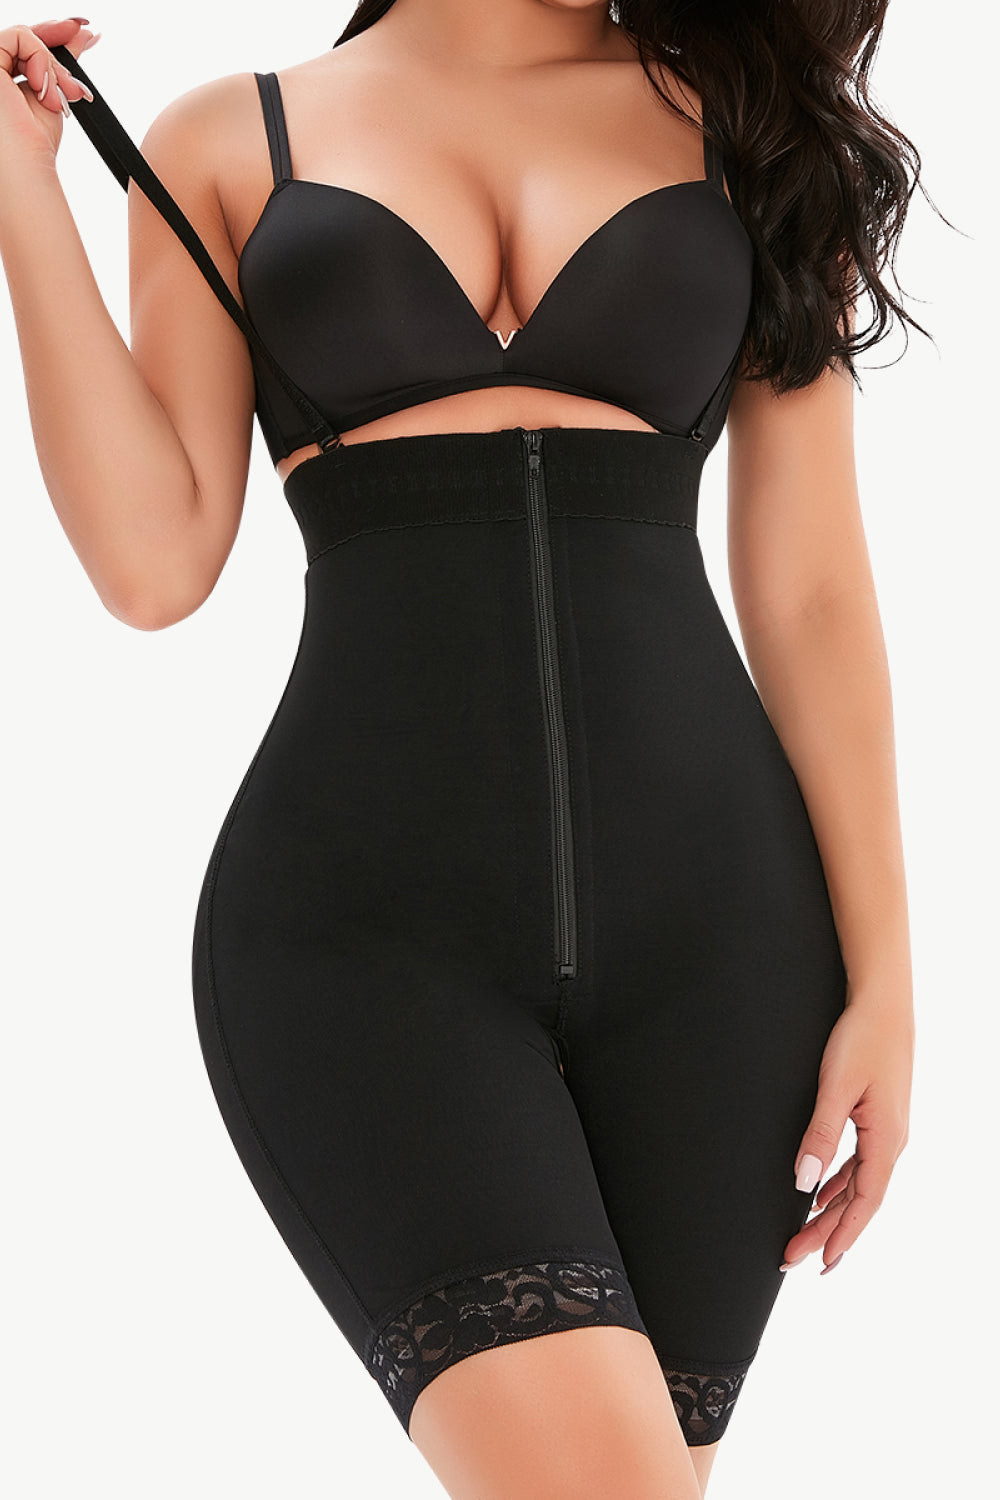 Full Size Lace Detail Zip-Up Under-Bust Shaping Bodysuit - DromedarShop.com Online Boutique